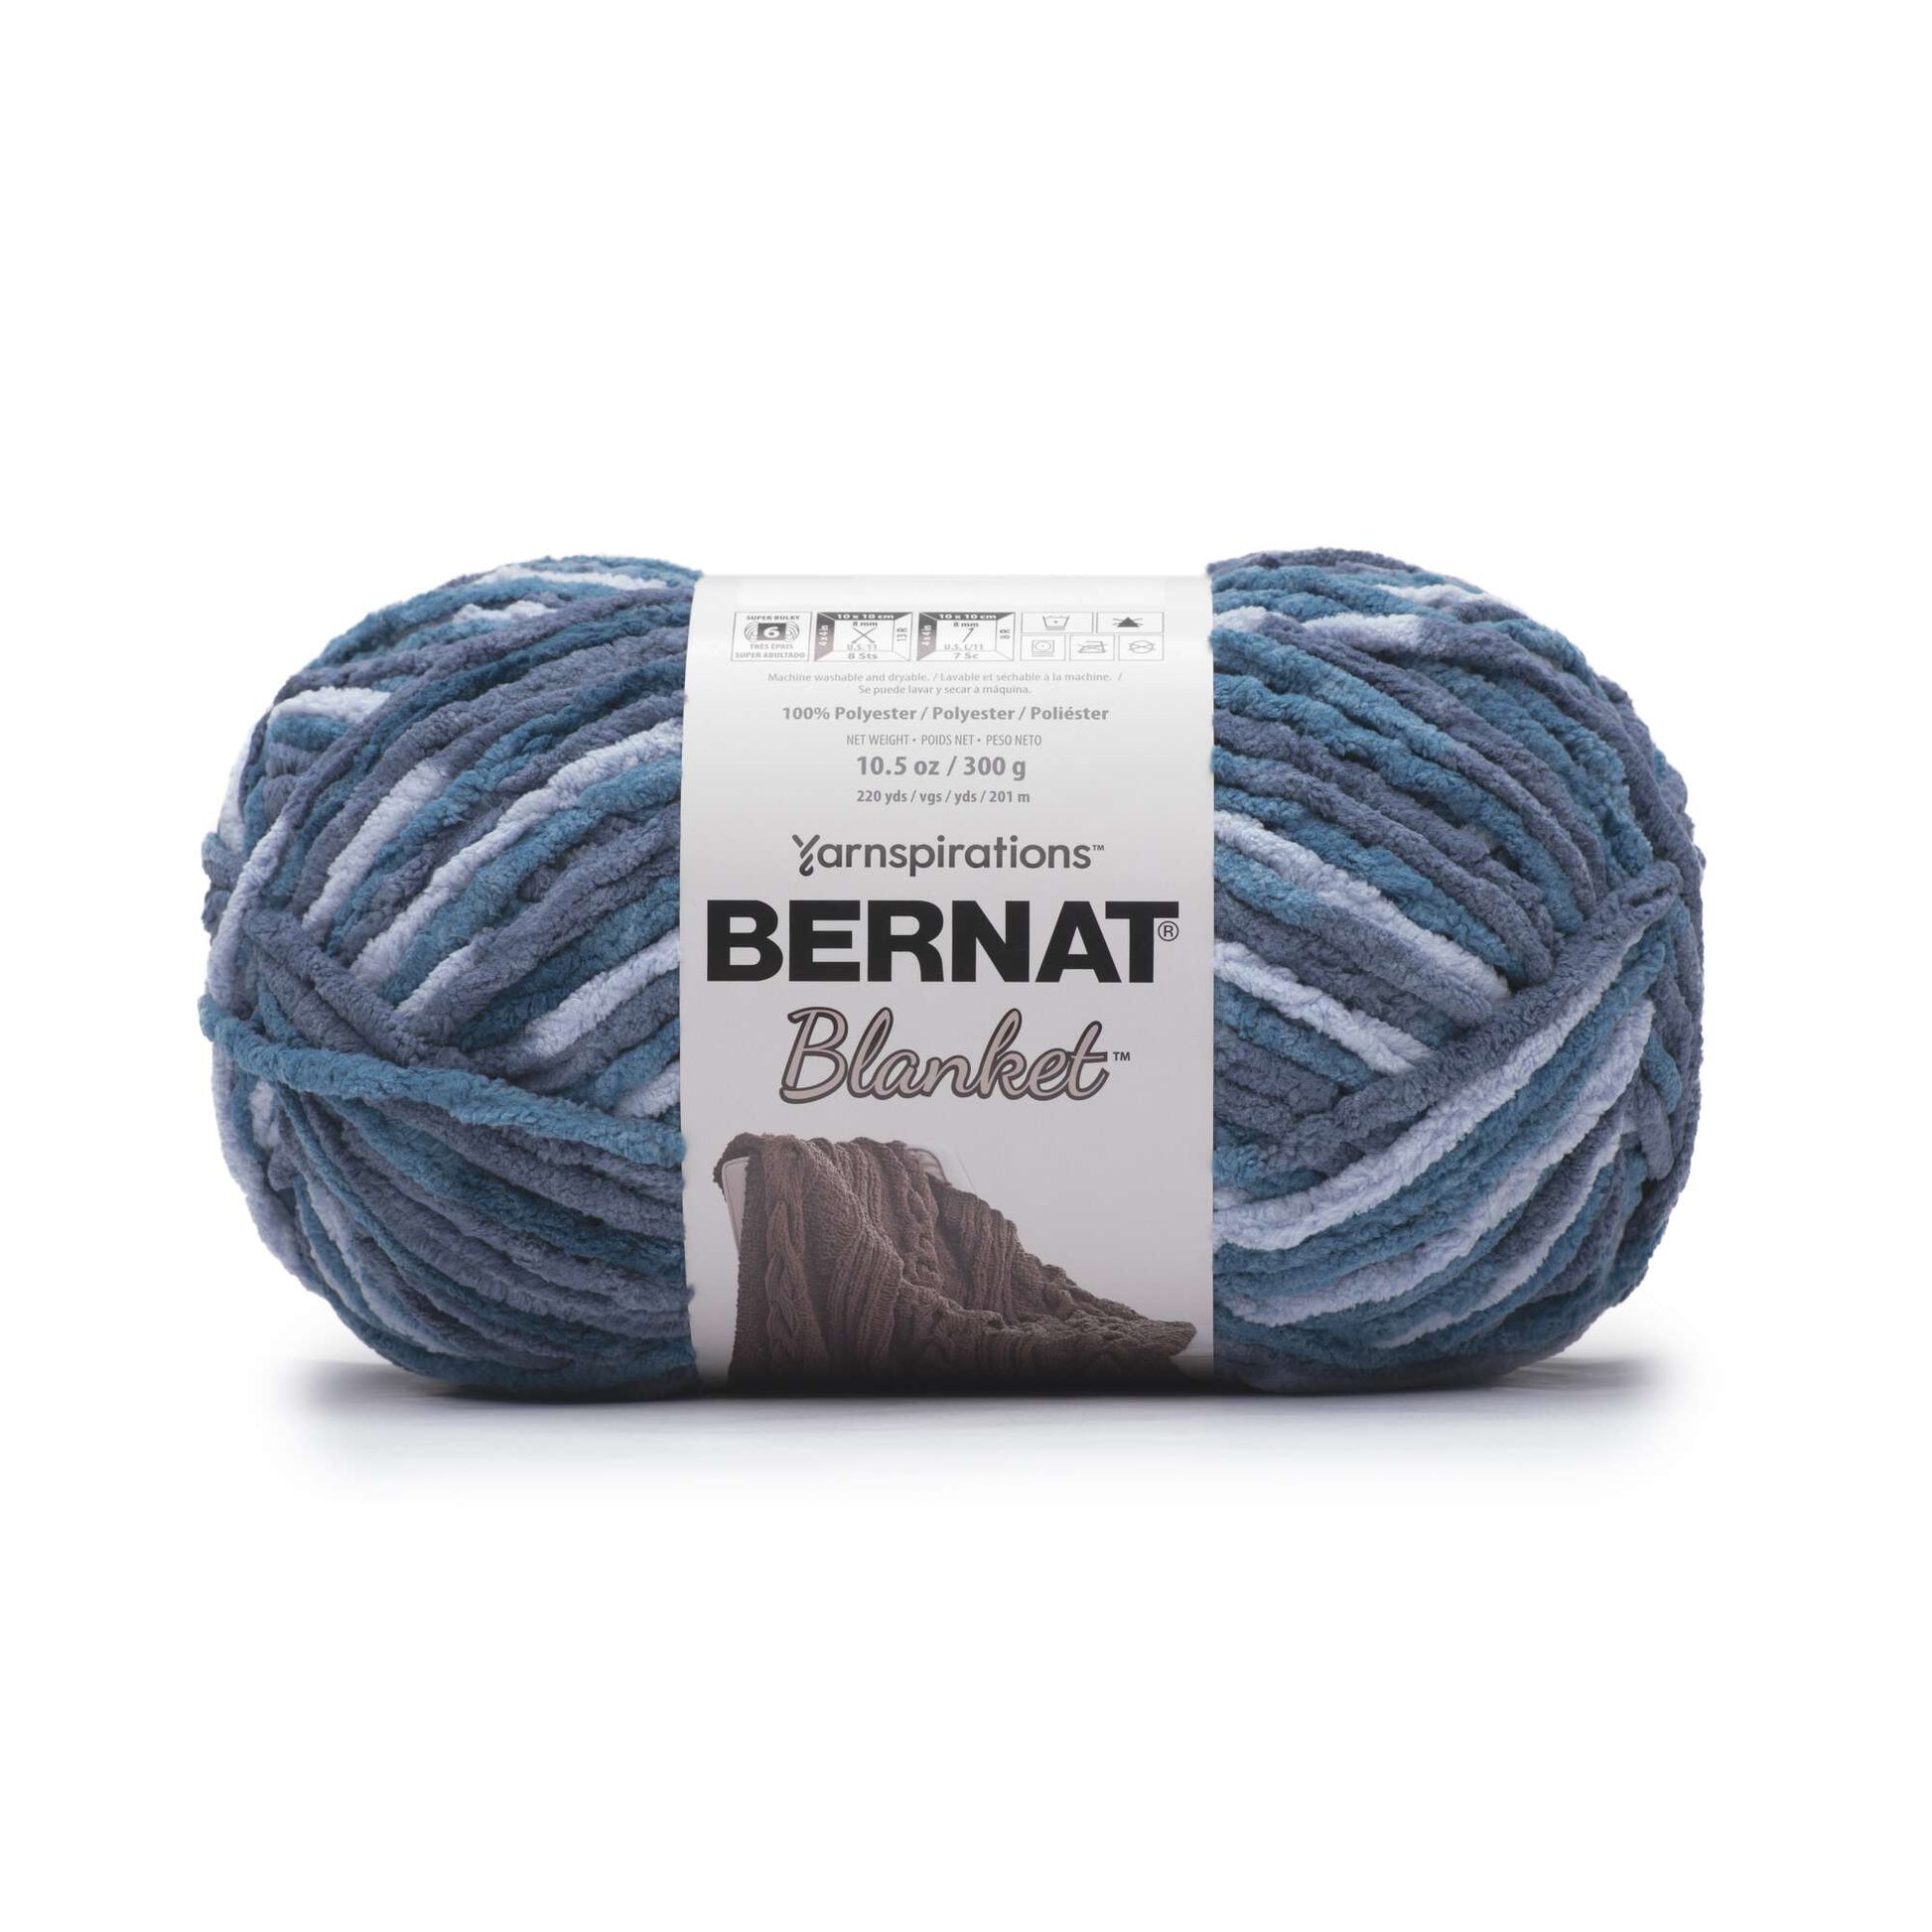 Bernat Blanket Yarn (300g/10.5oz) Cozy Blue